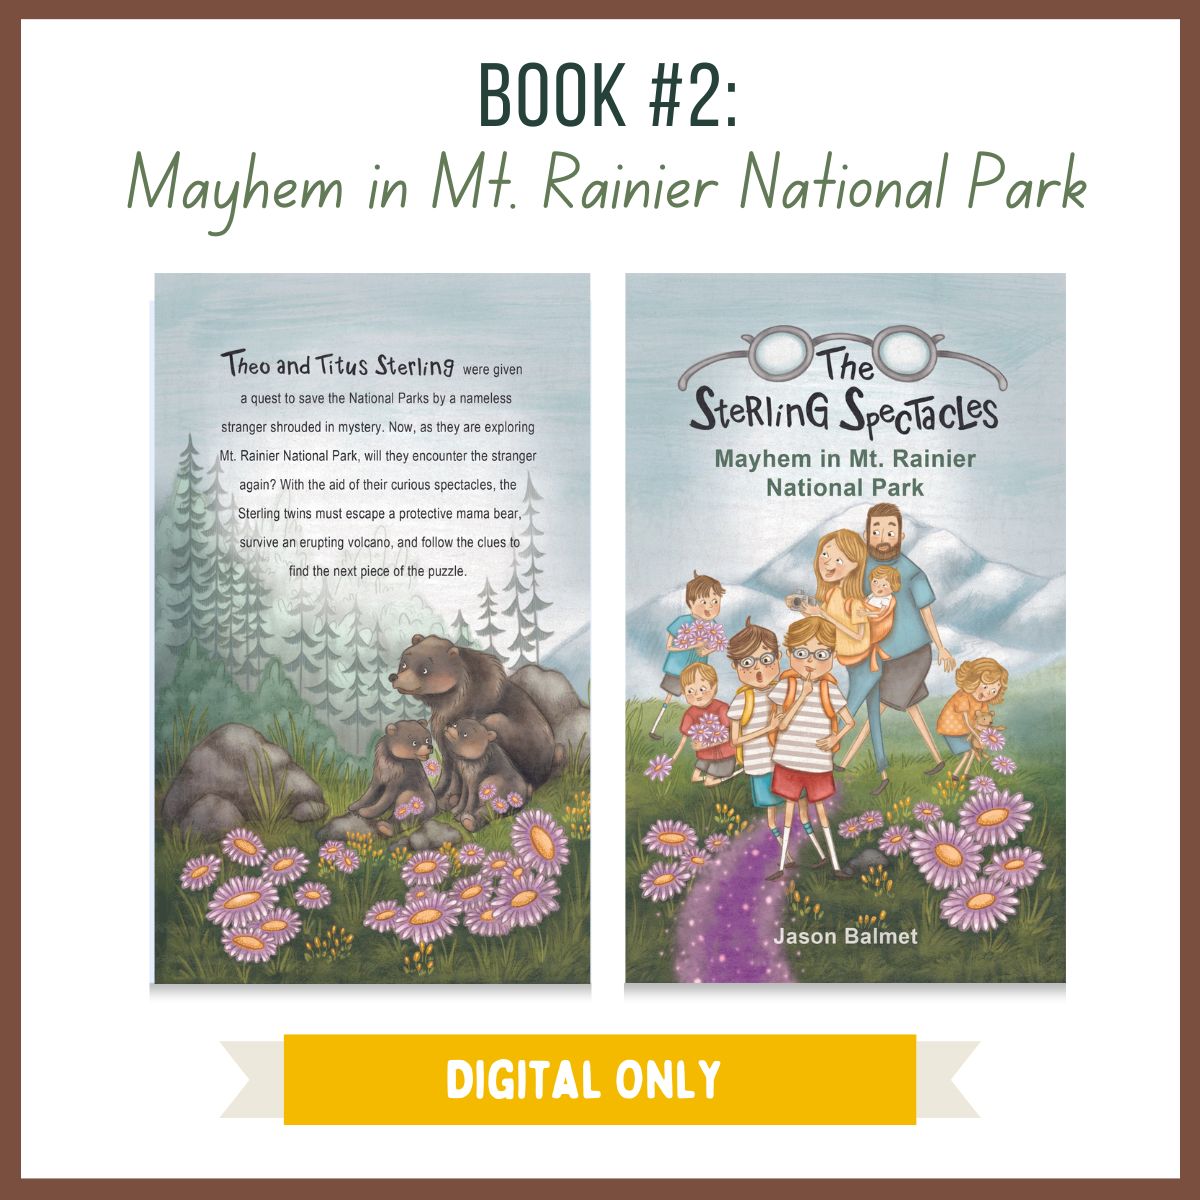 Book #2: Mayhem in Mt. Rainier National Park - DIGITAL